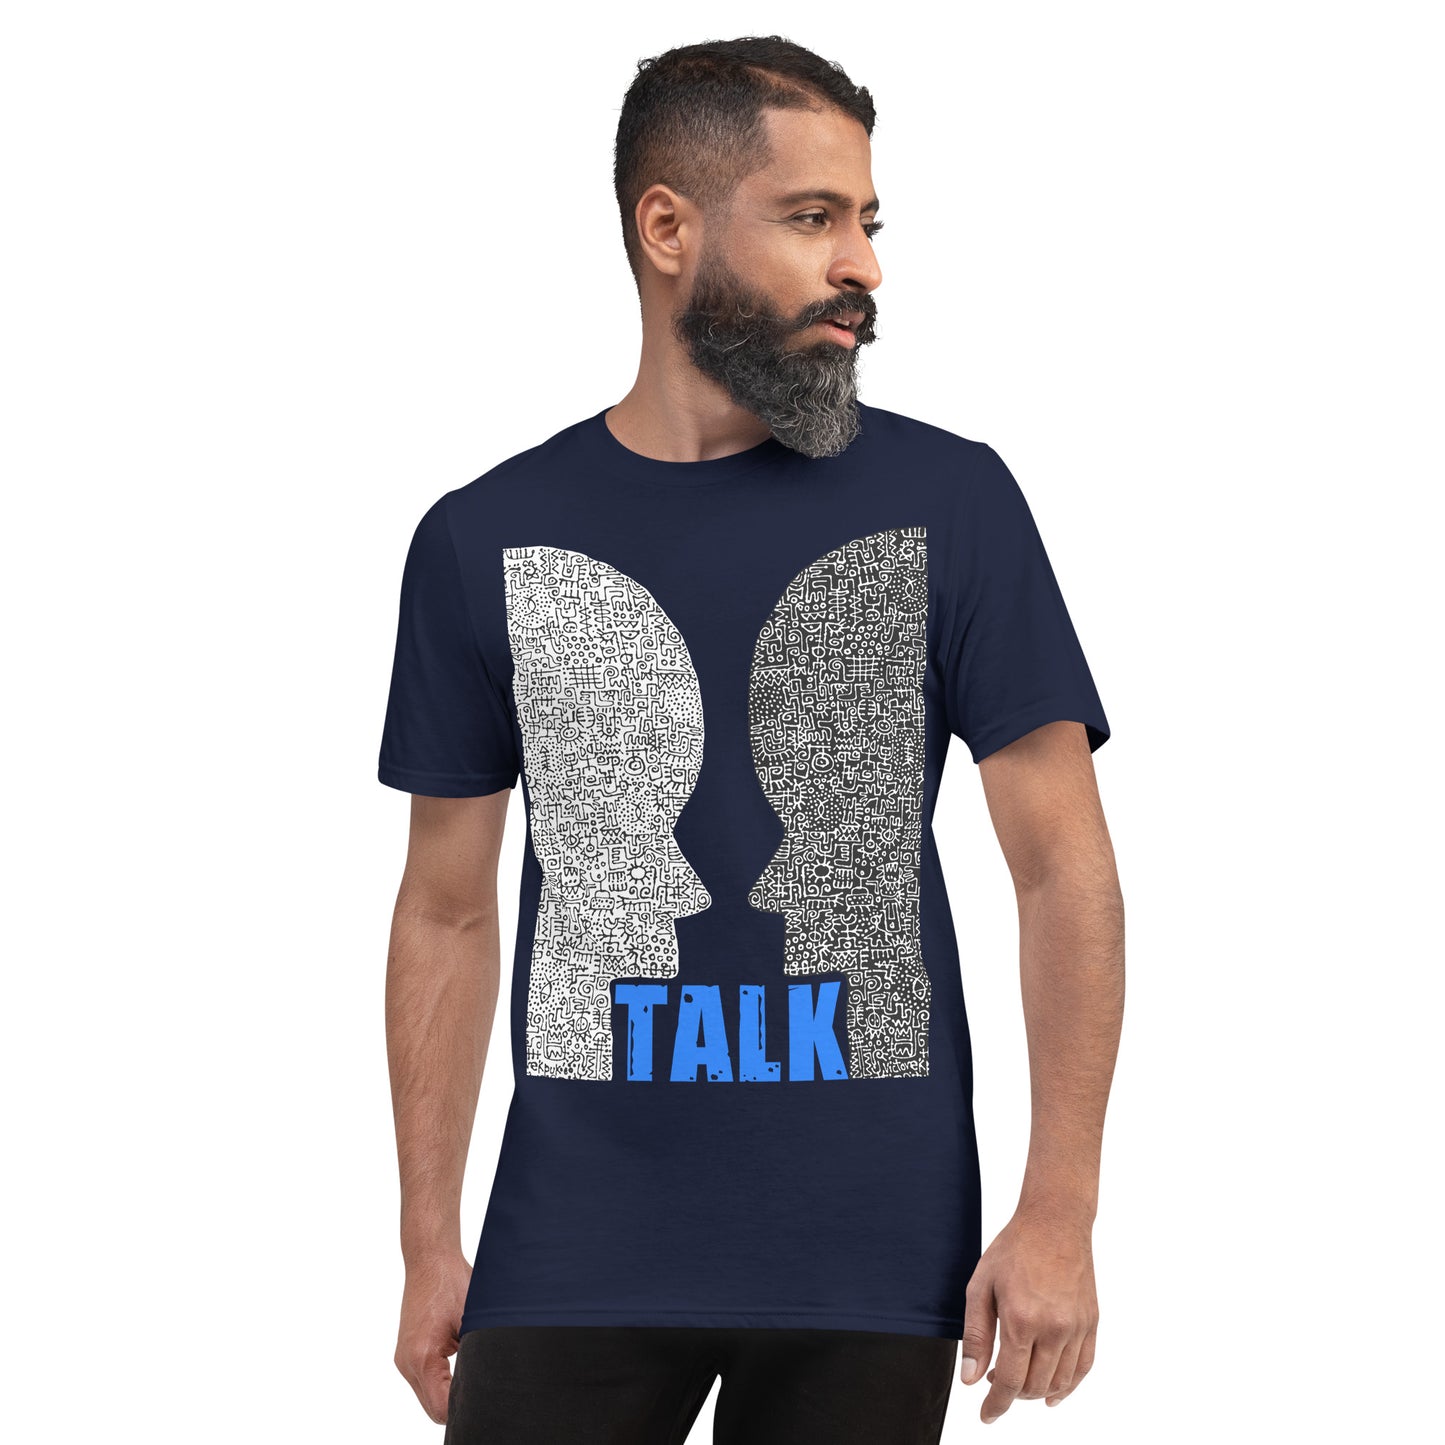 TALK unisex short-sleeve T-Shirt